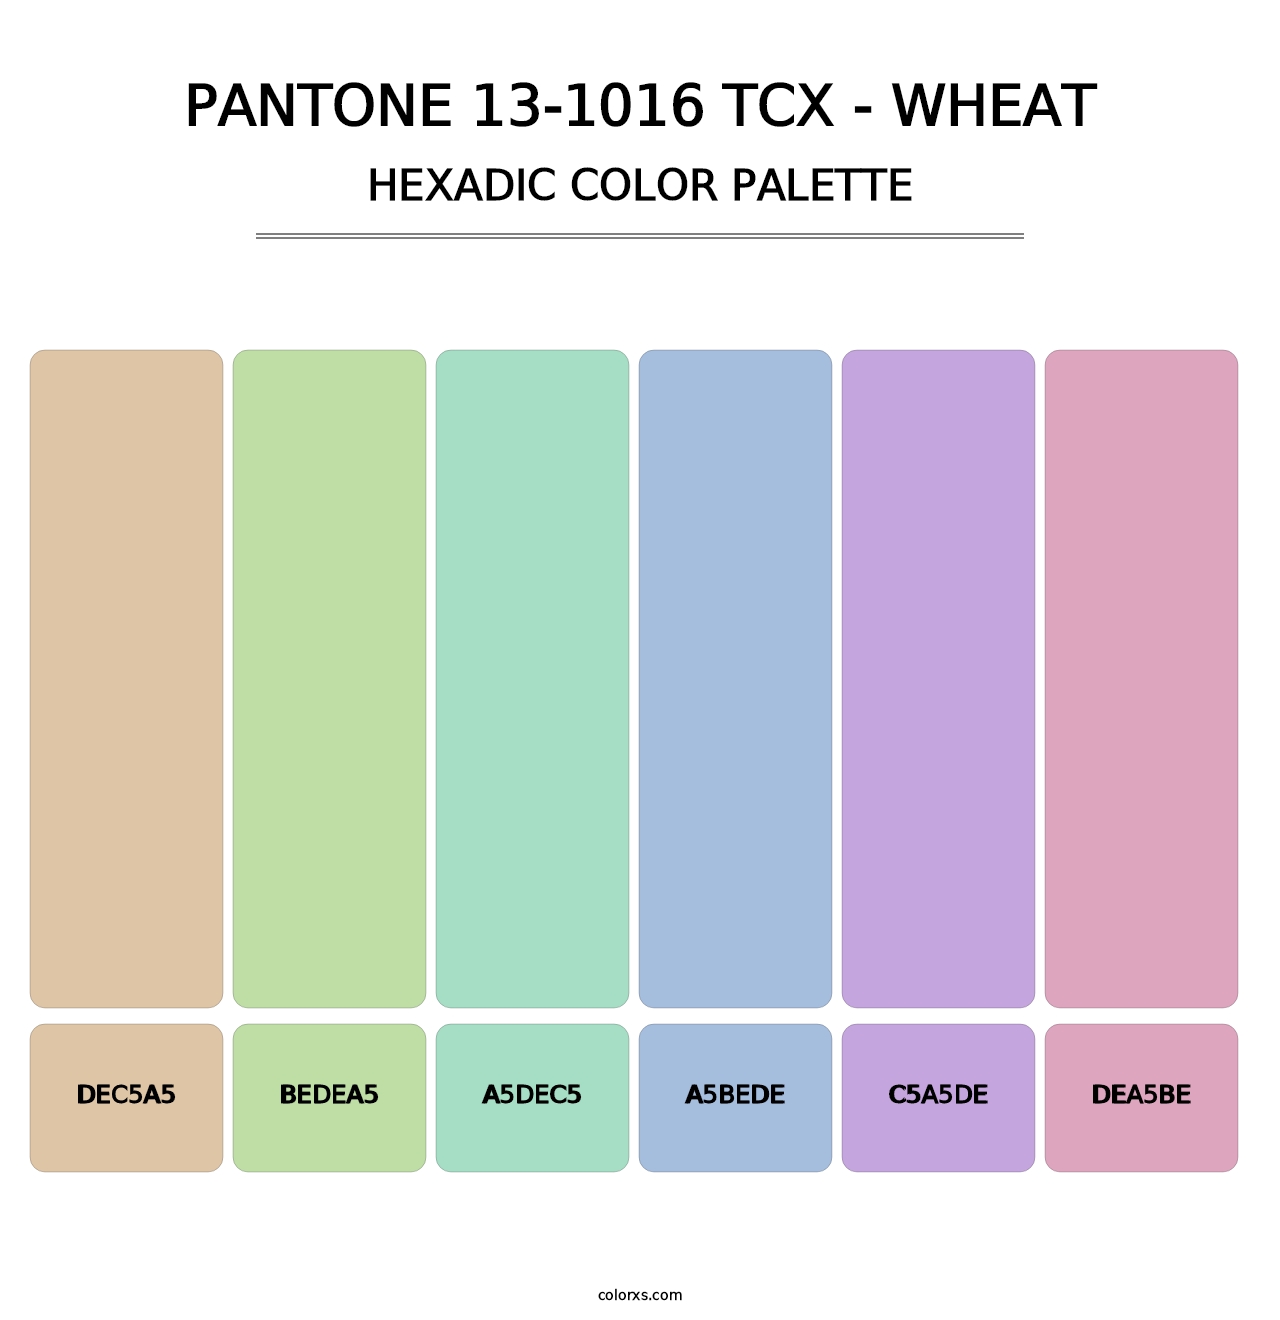 PANTONE 13-1016 TCX - Wheat - Hexadic Color Palette